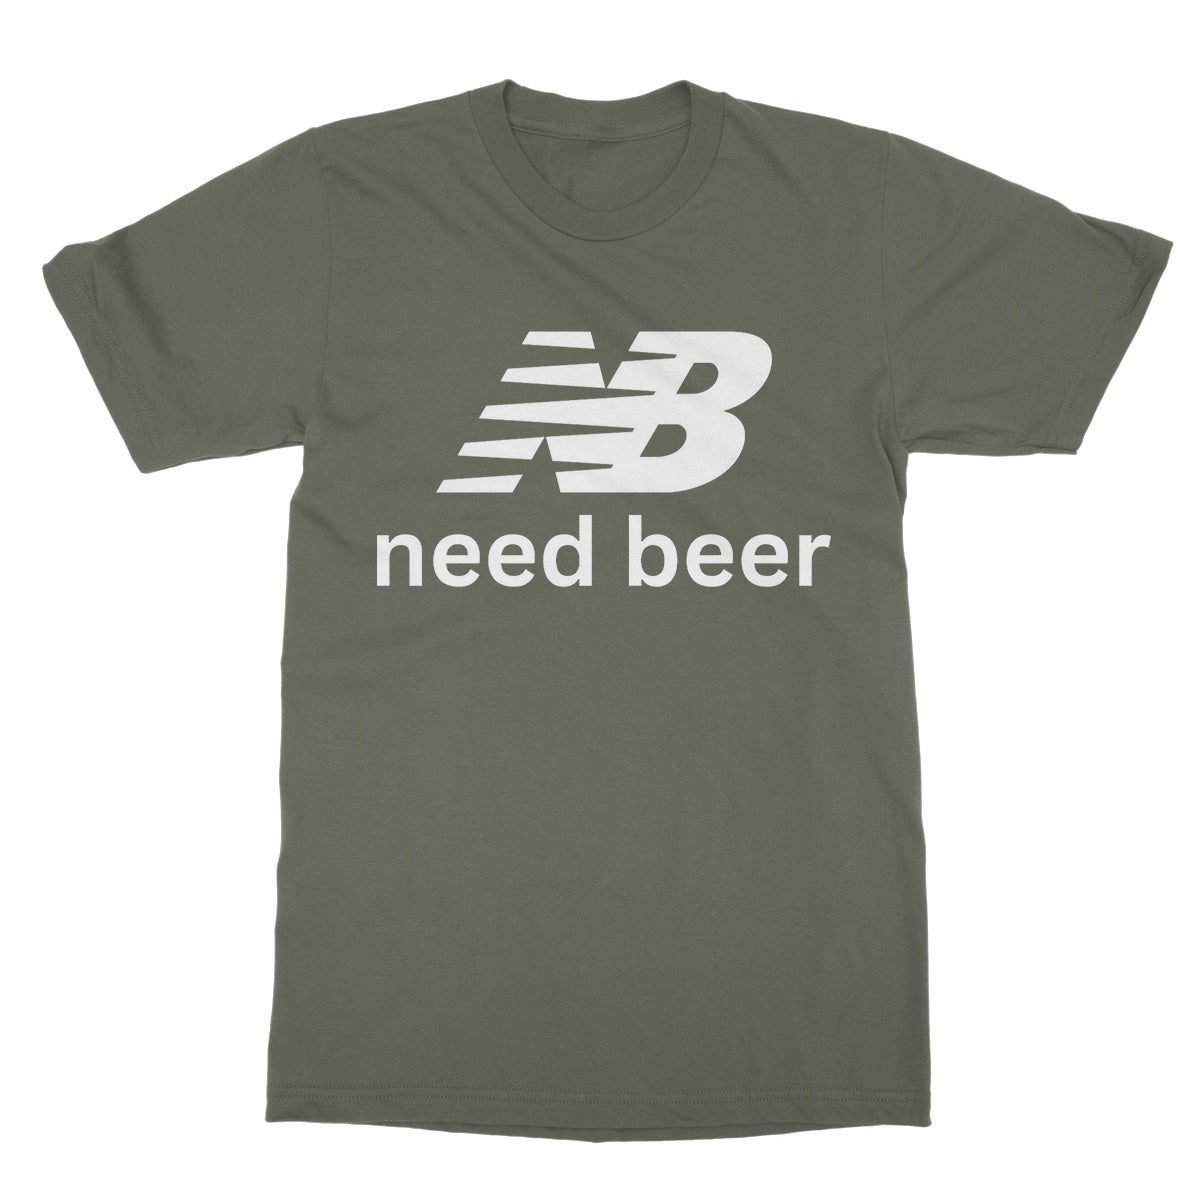 need beer t shirt green